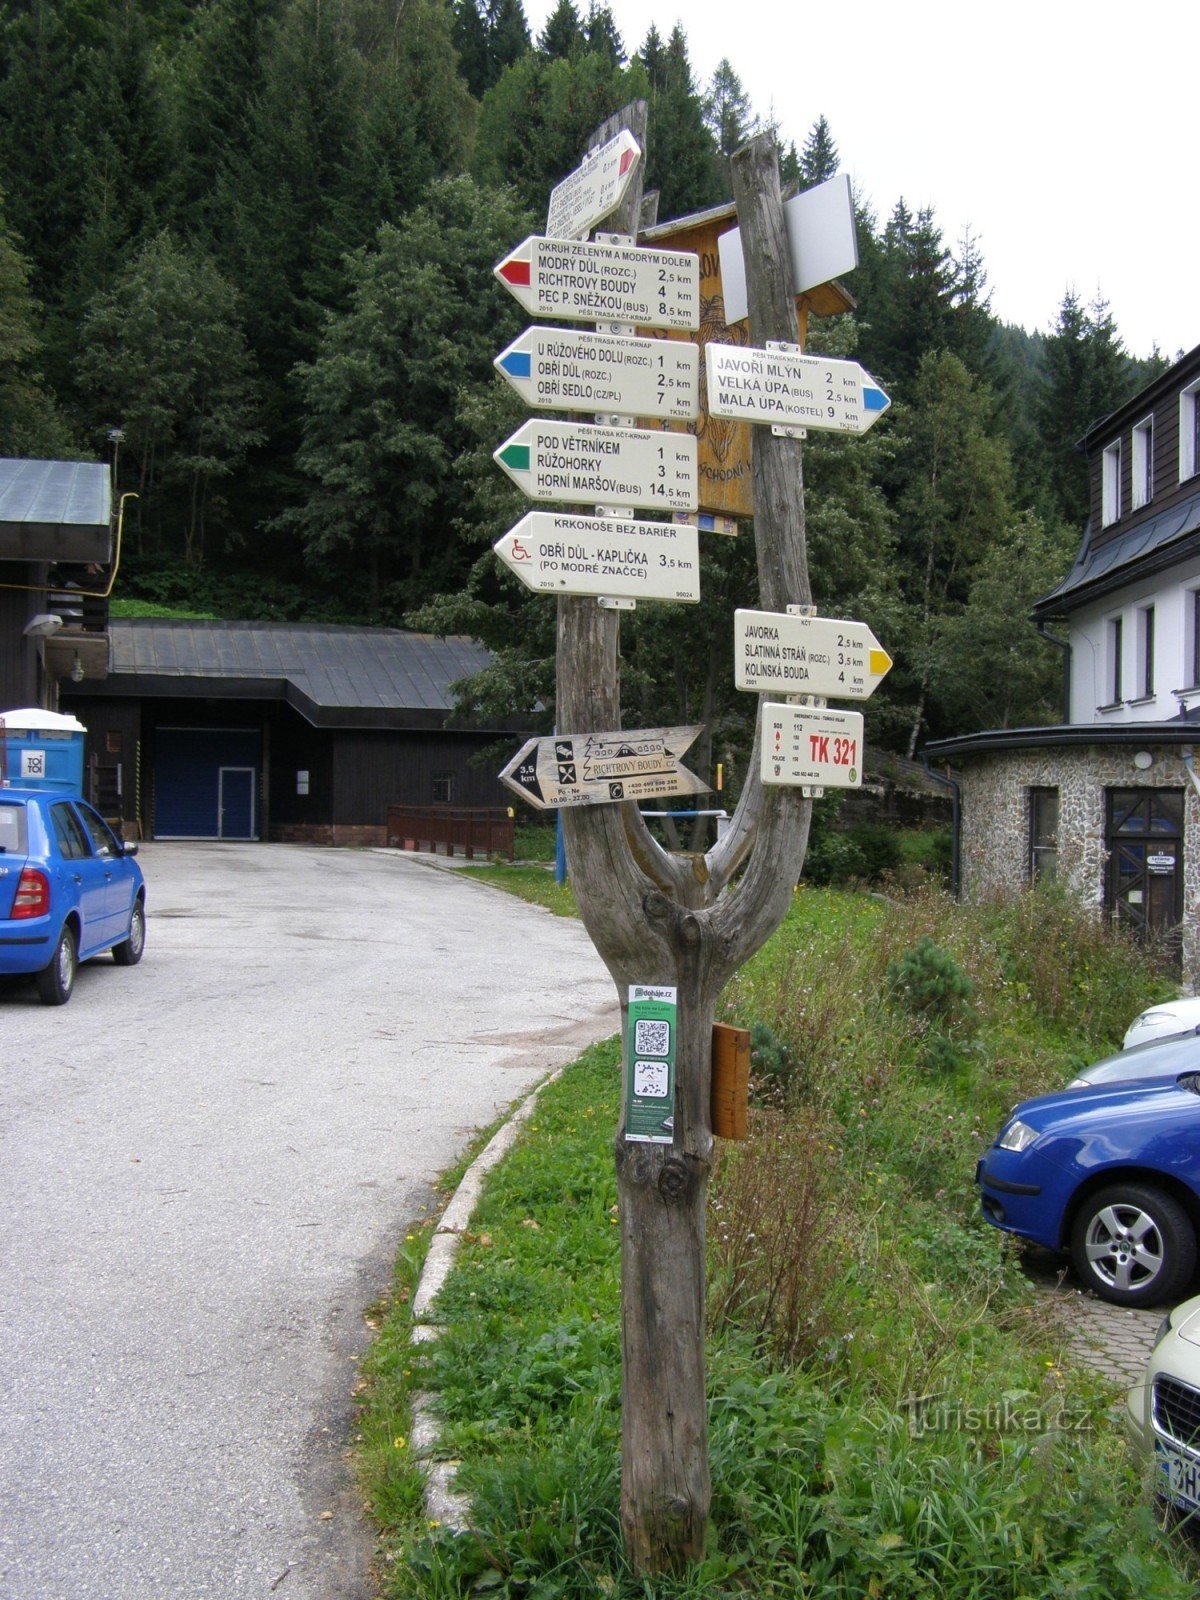 tourist junction Pec pod Sněžkou - the main signpost near the Corso hotel